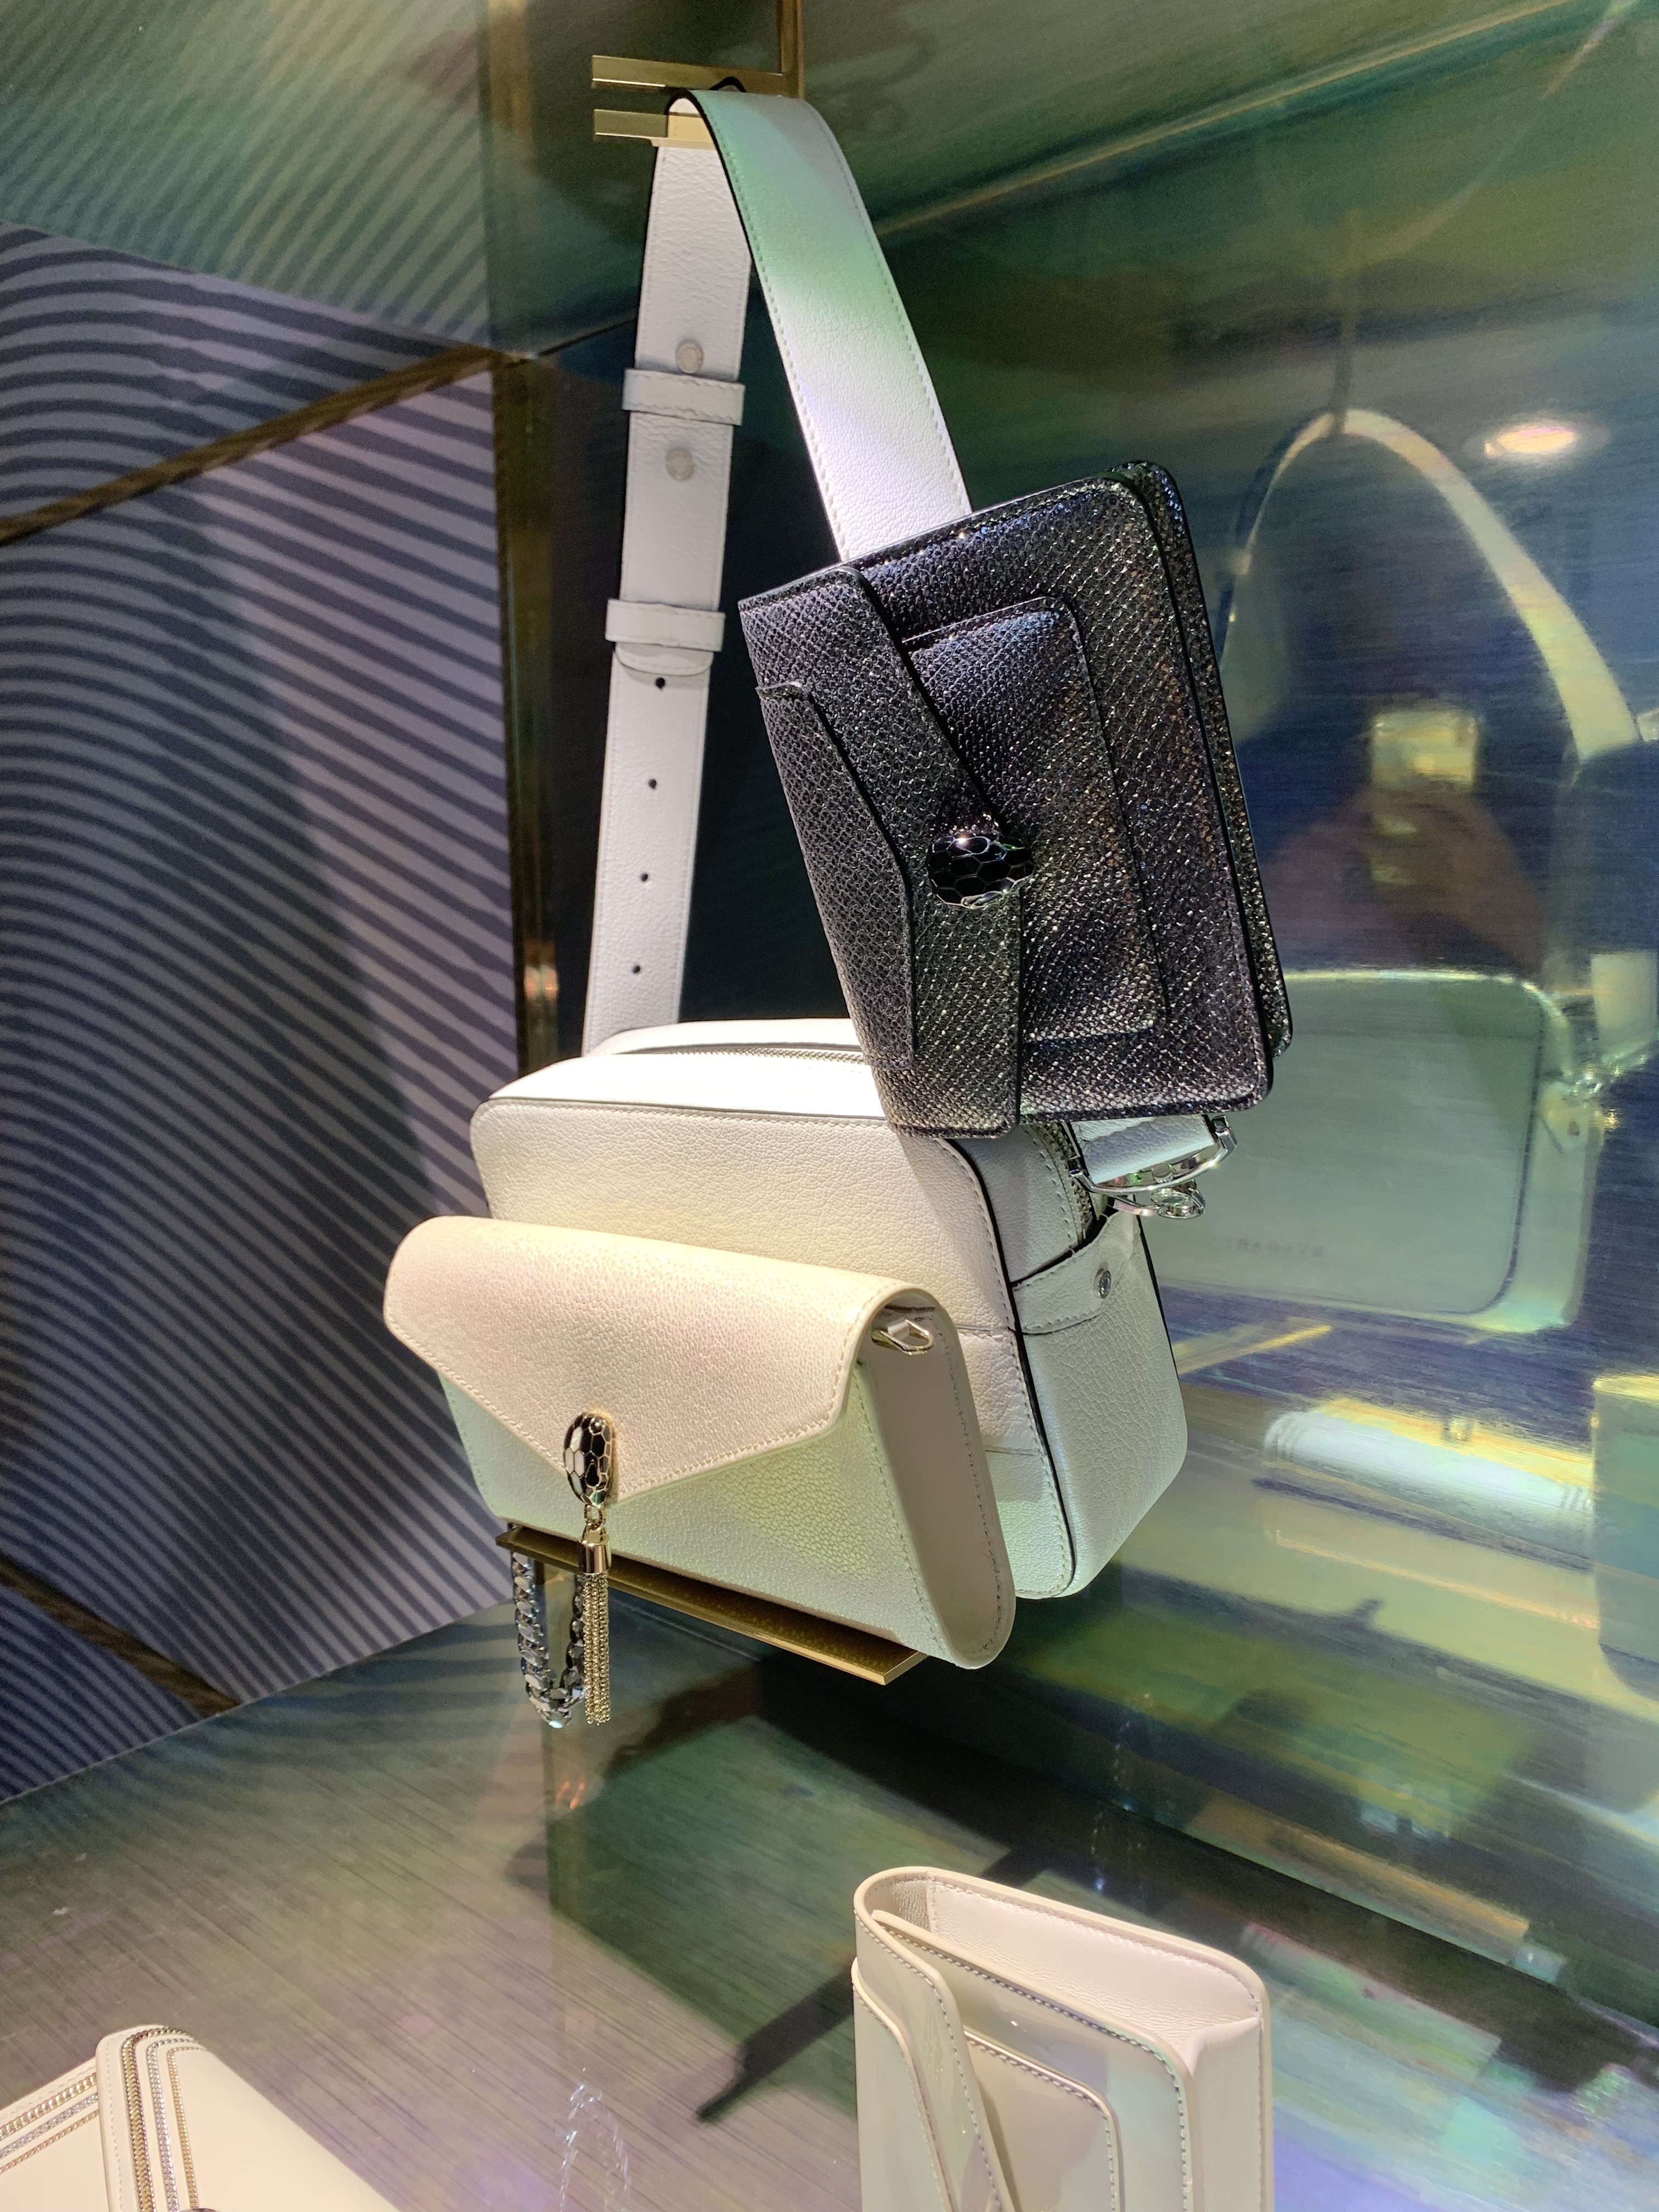 Modelo da bolsa Bulgari 7 Ways com mini clutch acoplada à alça e à parte frontal (Foto: Marie Claire)